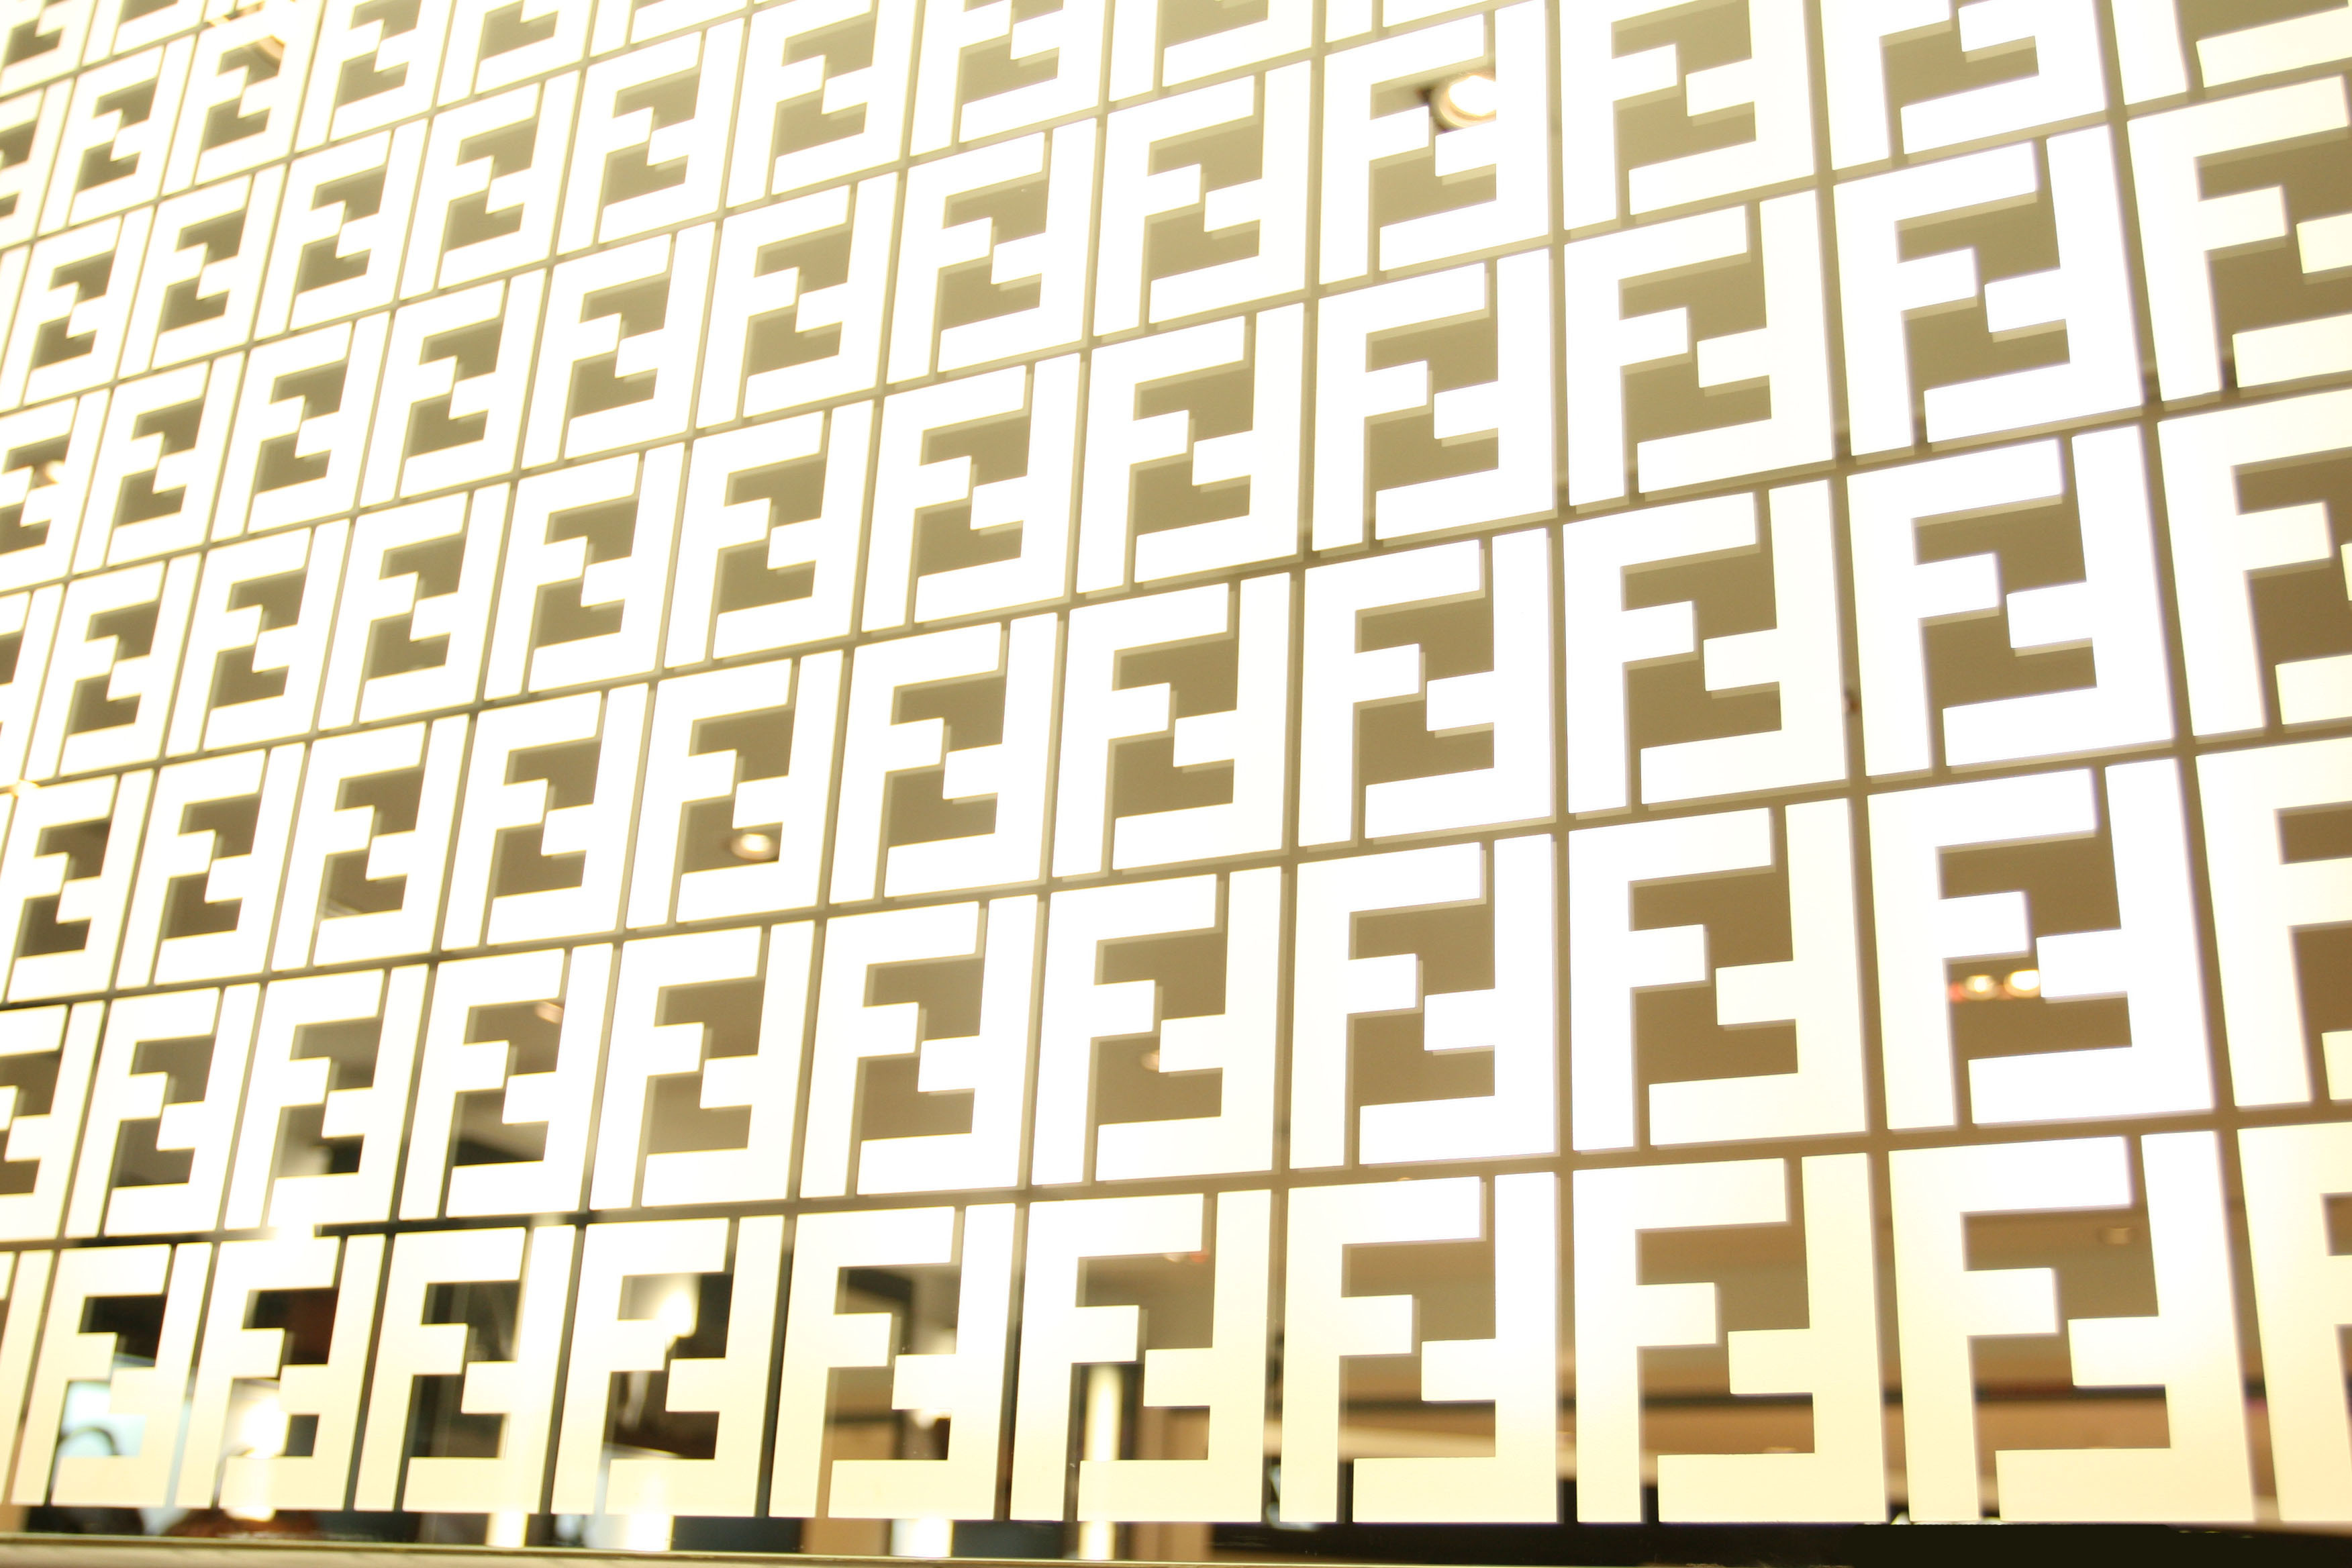 The texture of the Fendi logo Desktop wallpapers 600x382